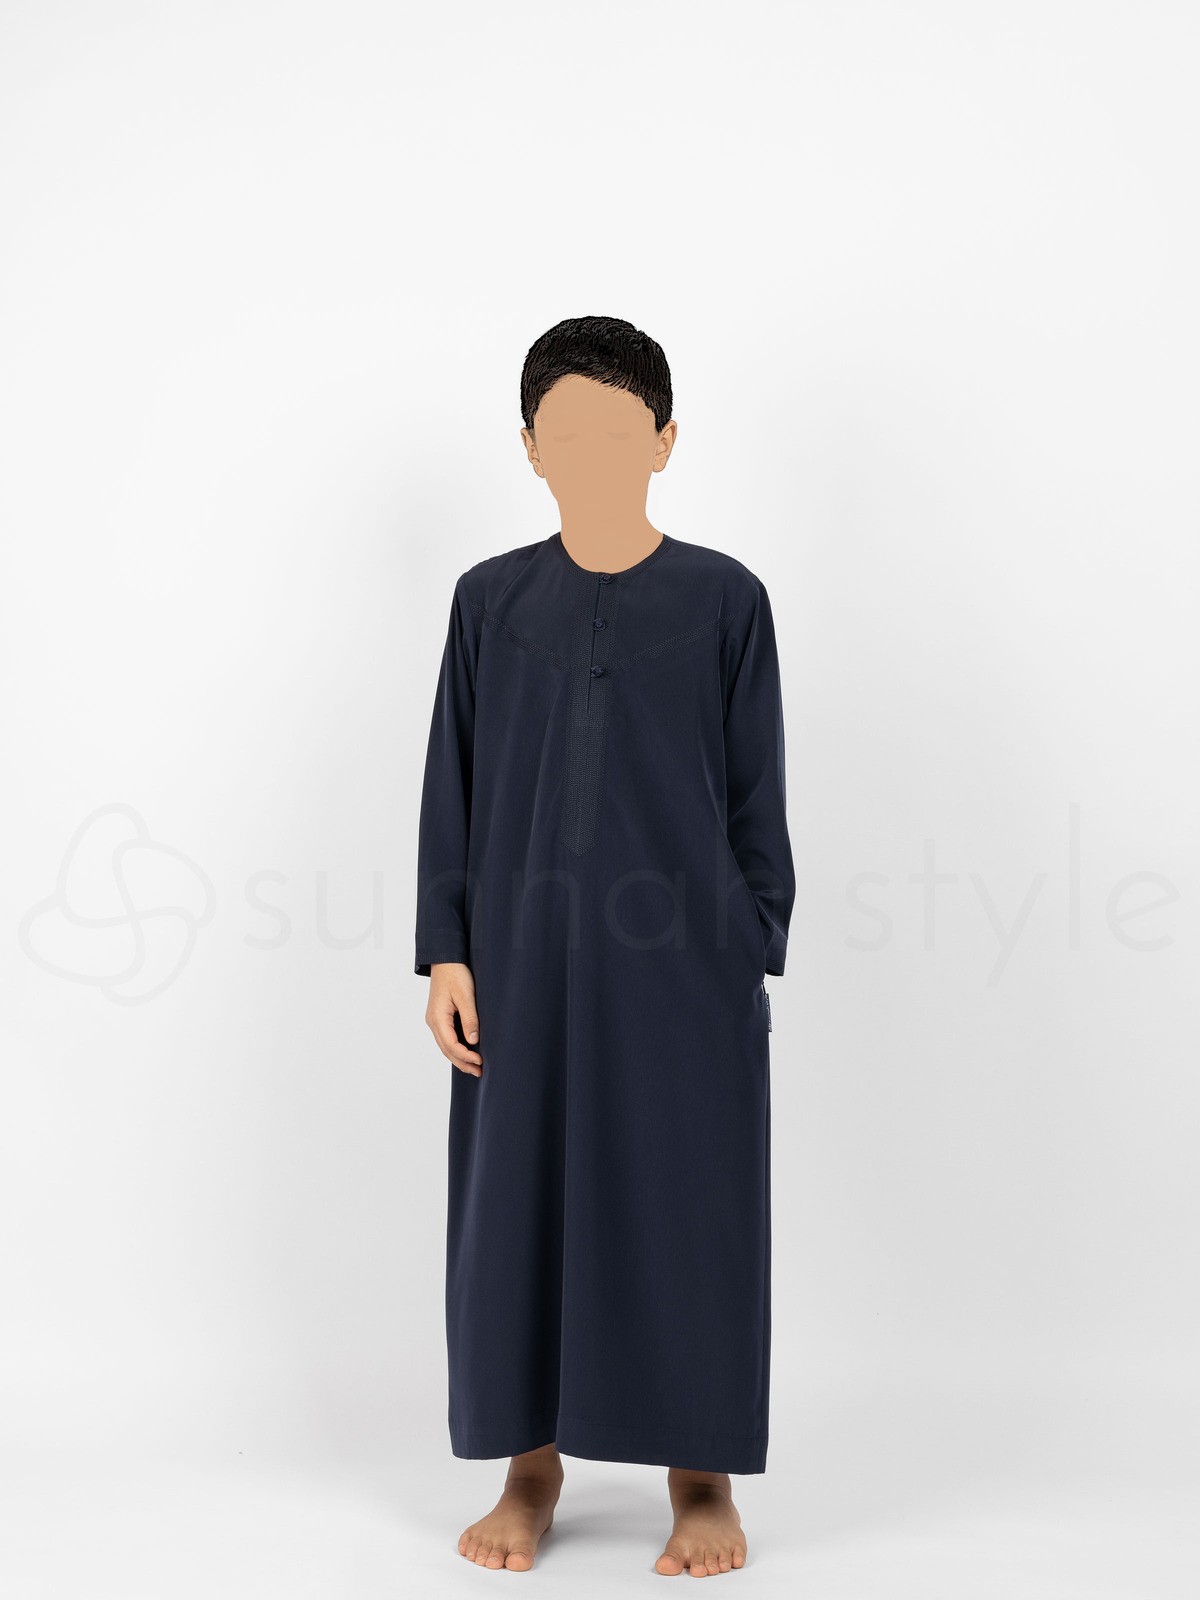 Sunnah Style - Boys Omani Embroidered Thobe - Child (Navy Blue)